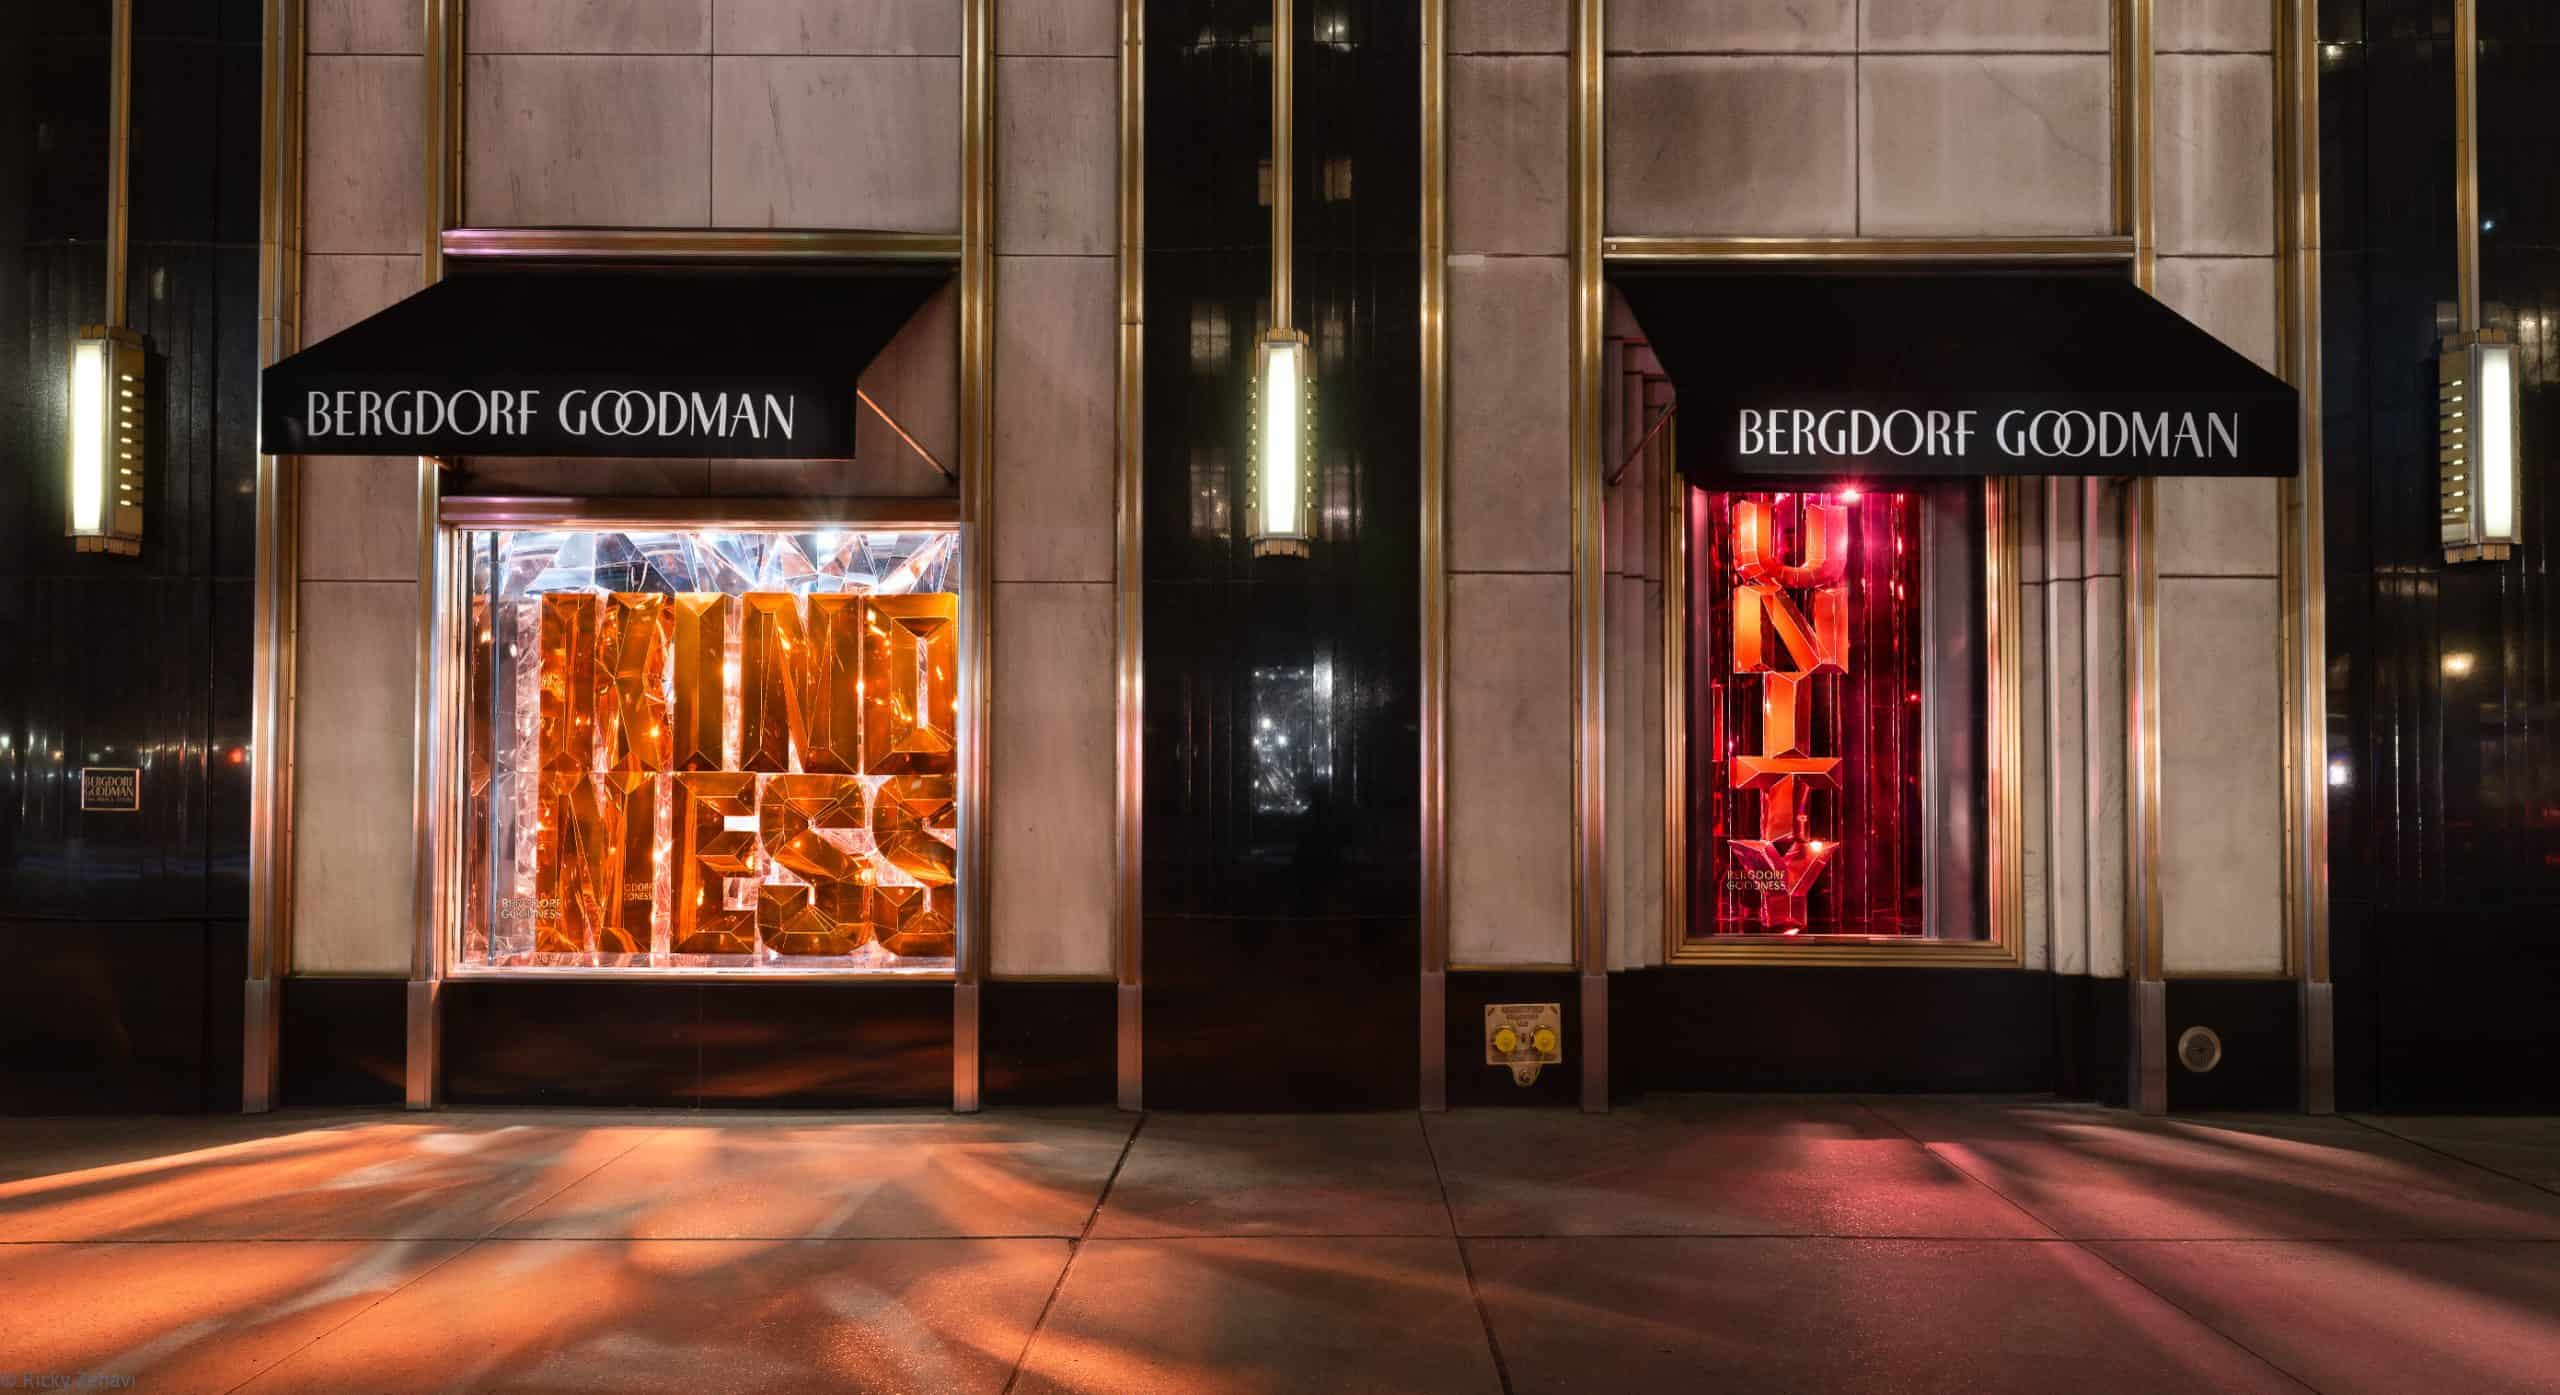 New York Philharmonic Featured in Iconic Bergdorf Goodman Holiday Windows